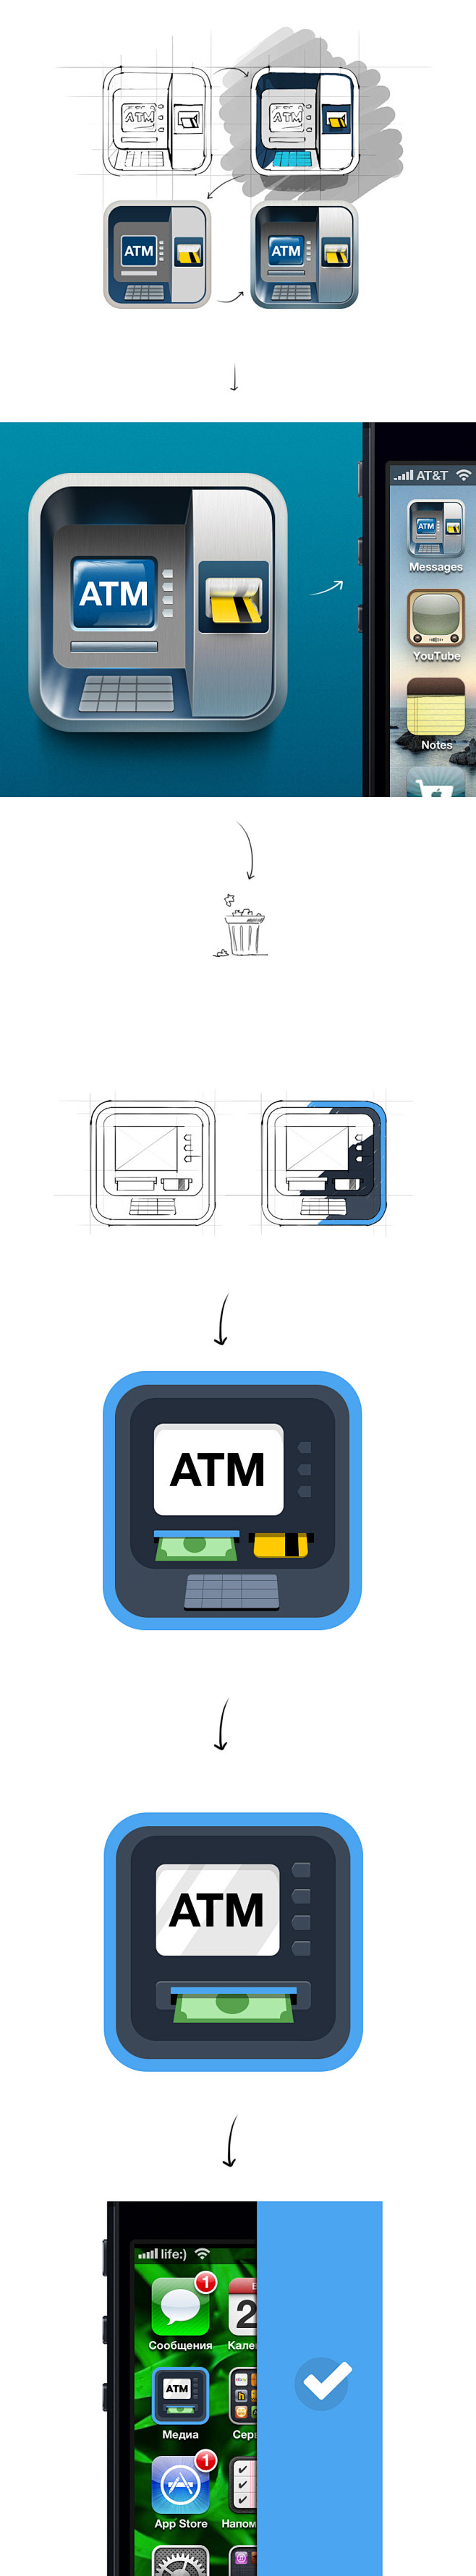 ATM图标设计制作过程
http://....